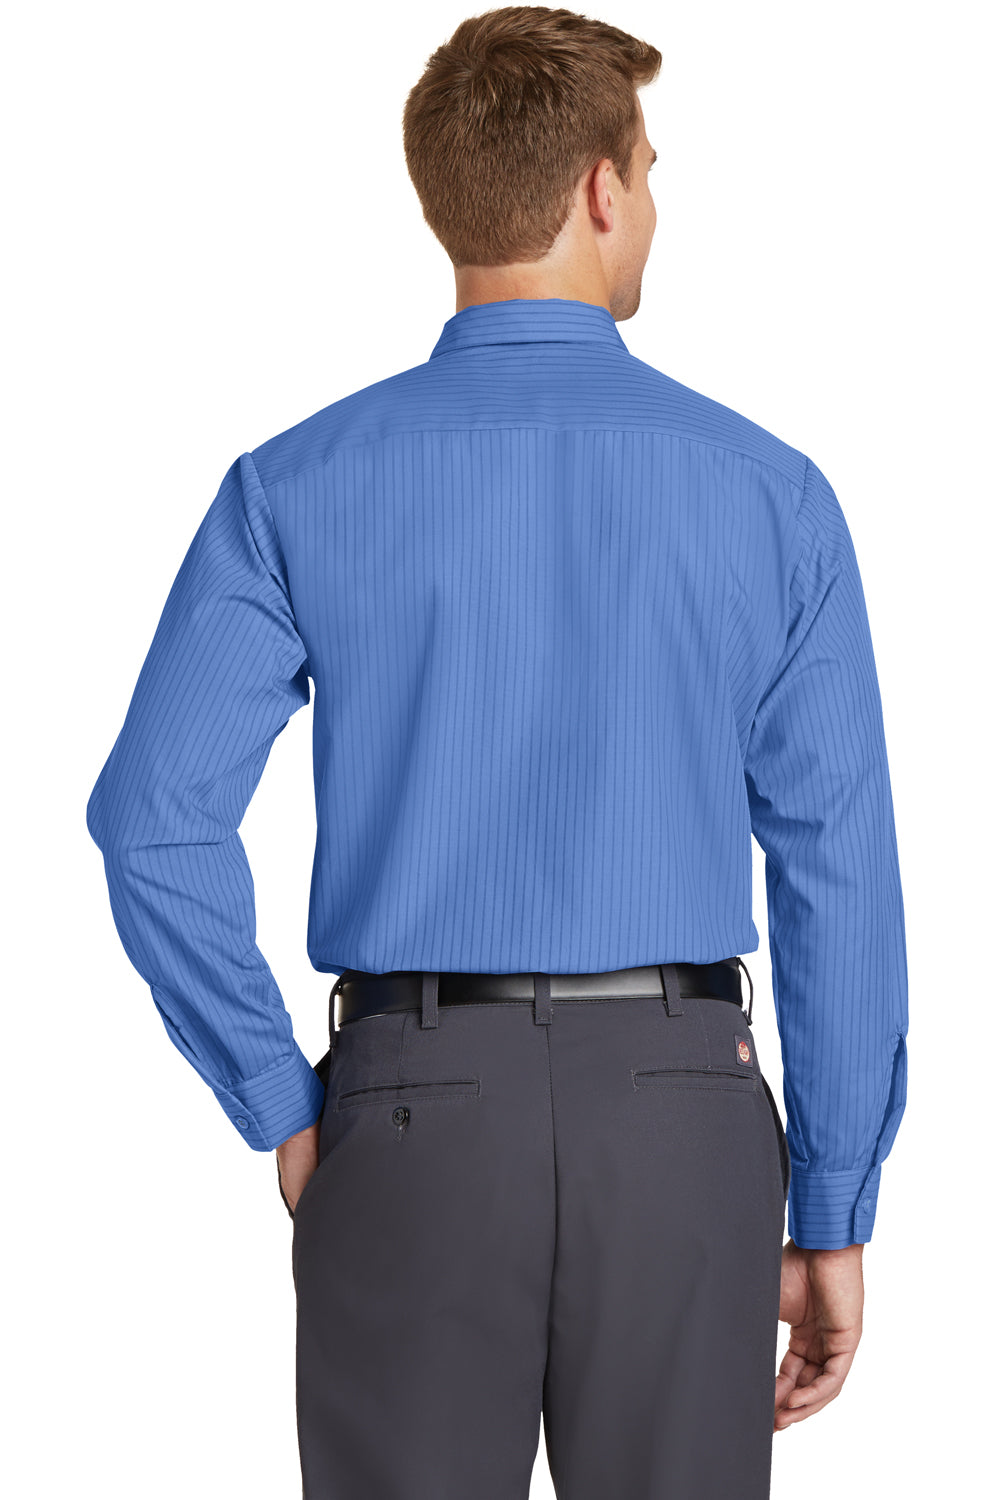 Red Kap CS10 Mens Industrial Moisture Wicking Long Sleeve Button Down Shirt w/ Double Pockets Petrol Blue/Navy Blue Back